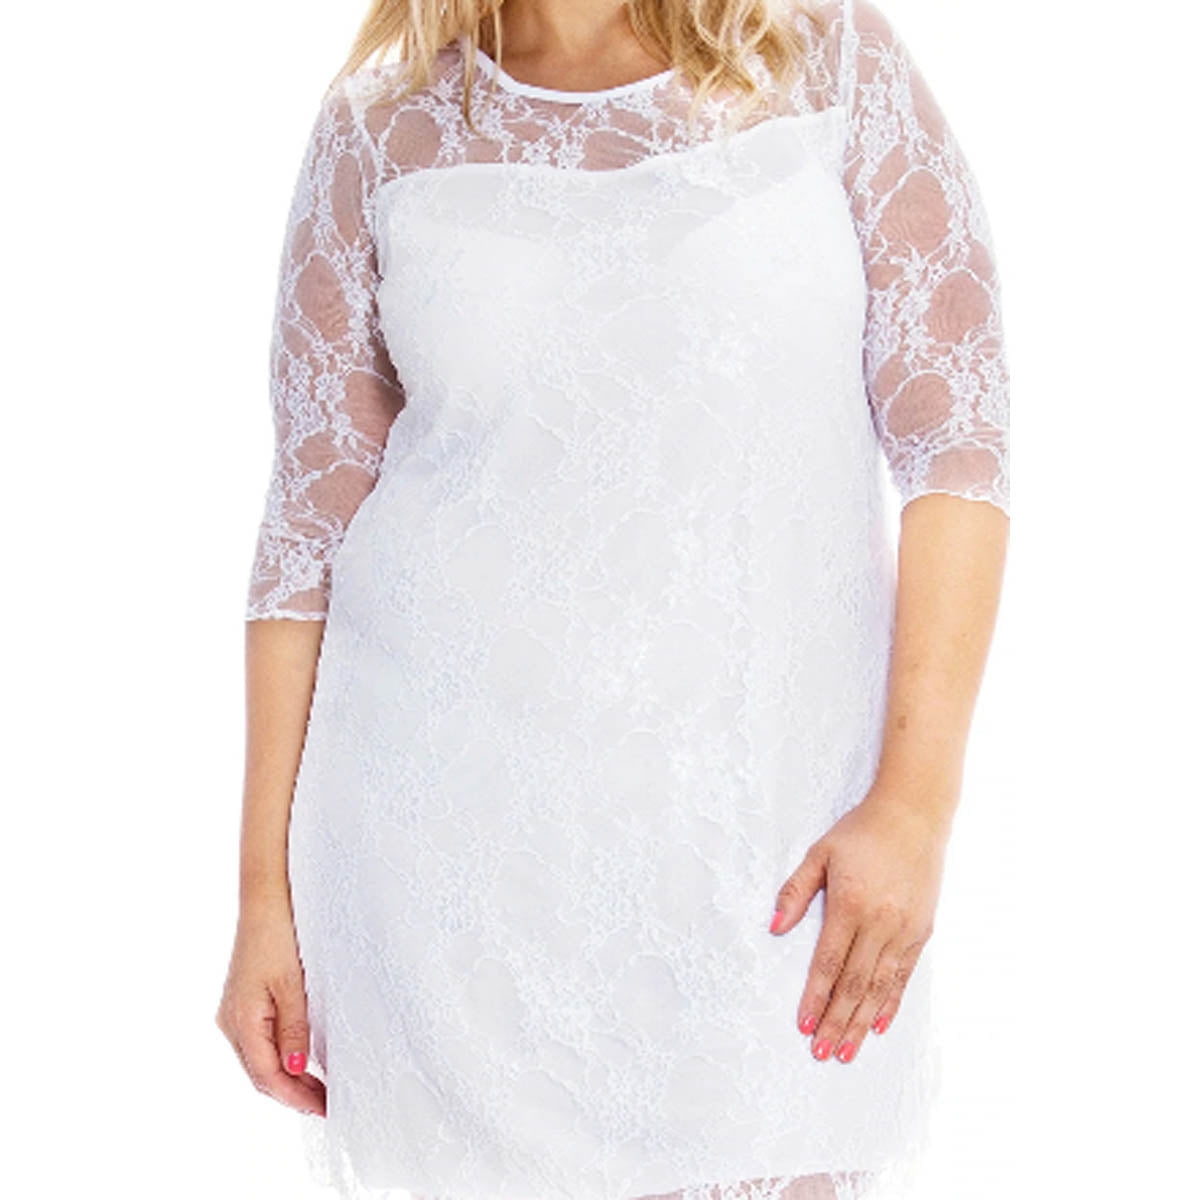 Fine Lace 3/4 sleeve lined swing dress - plus sizes